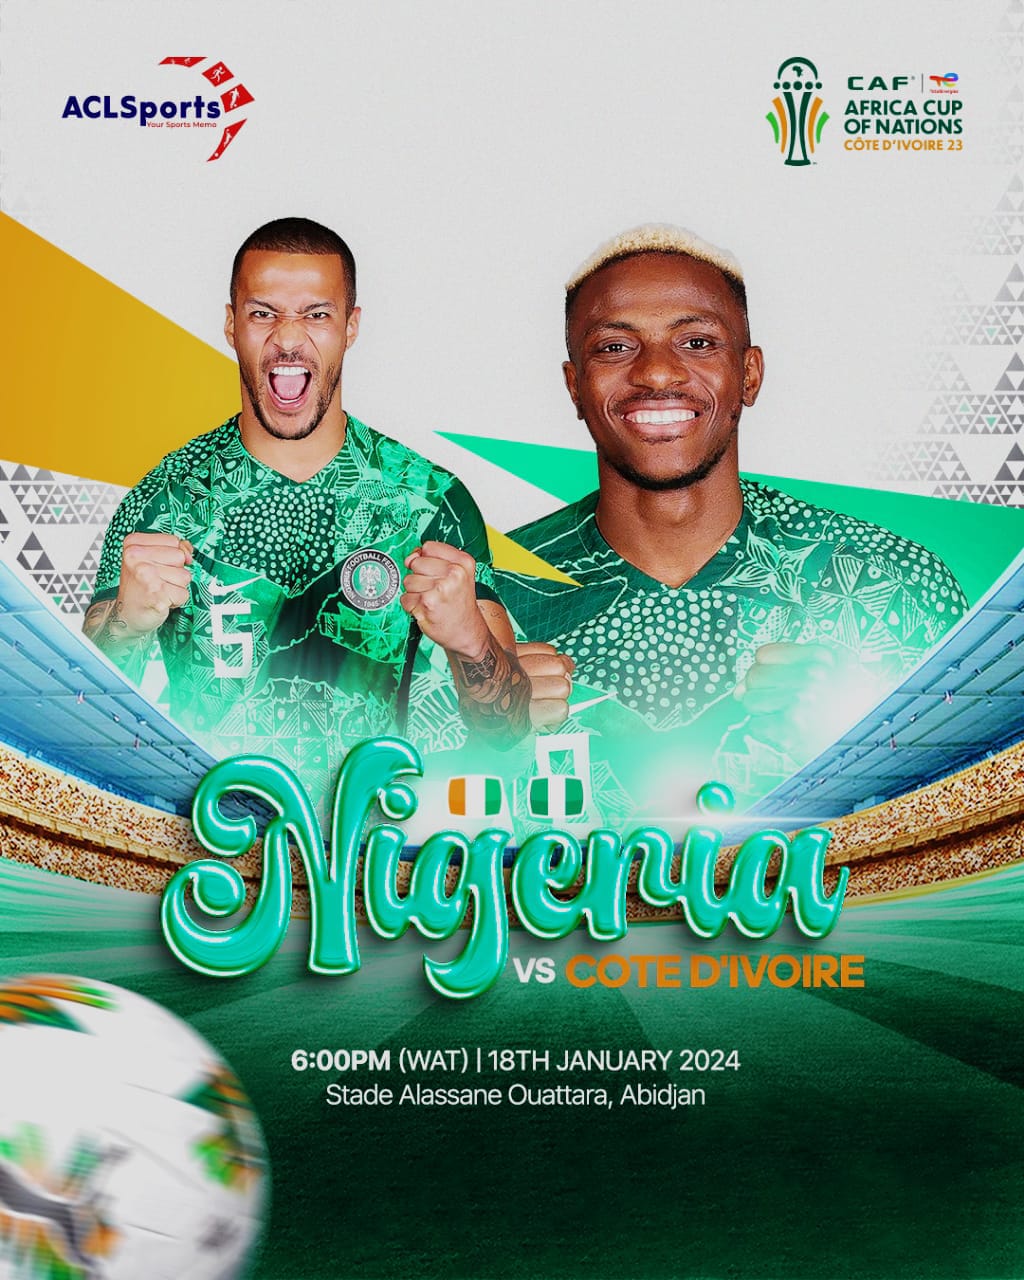 AFCON2023 CLASSIC PREVIEW: Côte d'Ivoire vs Nigeria - ACLSports